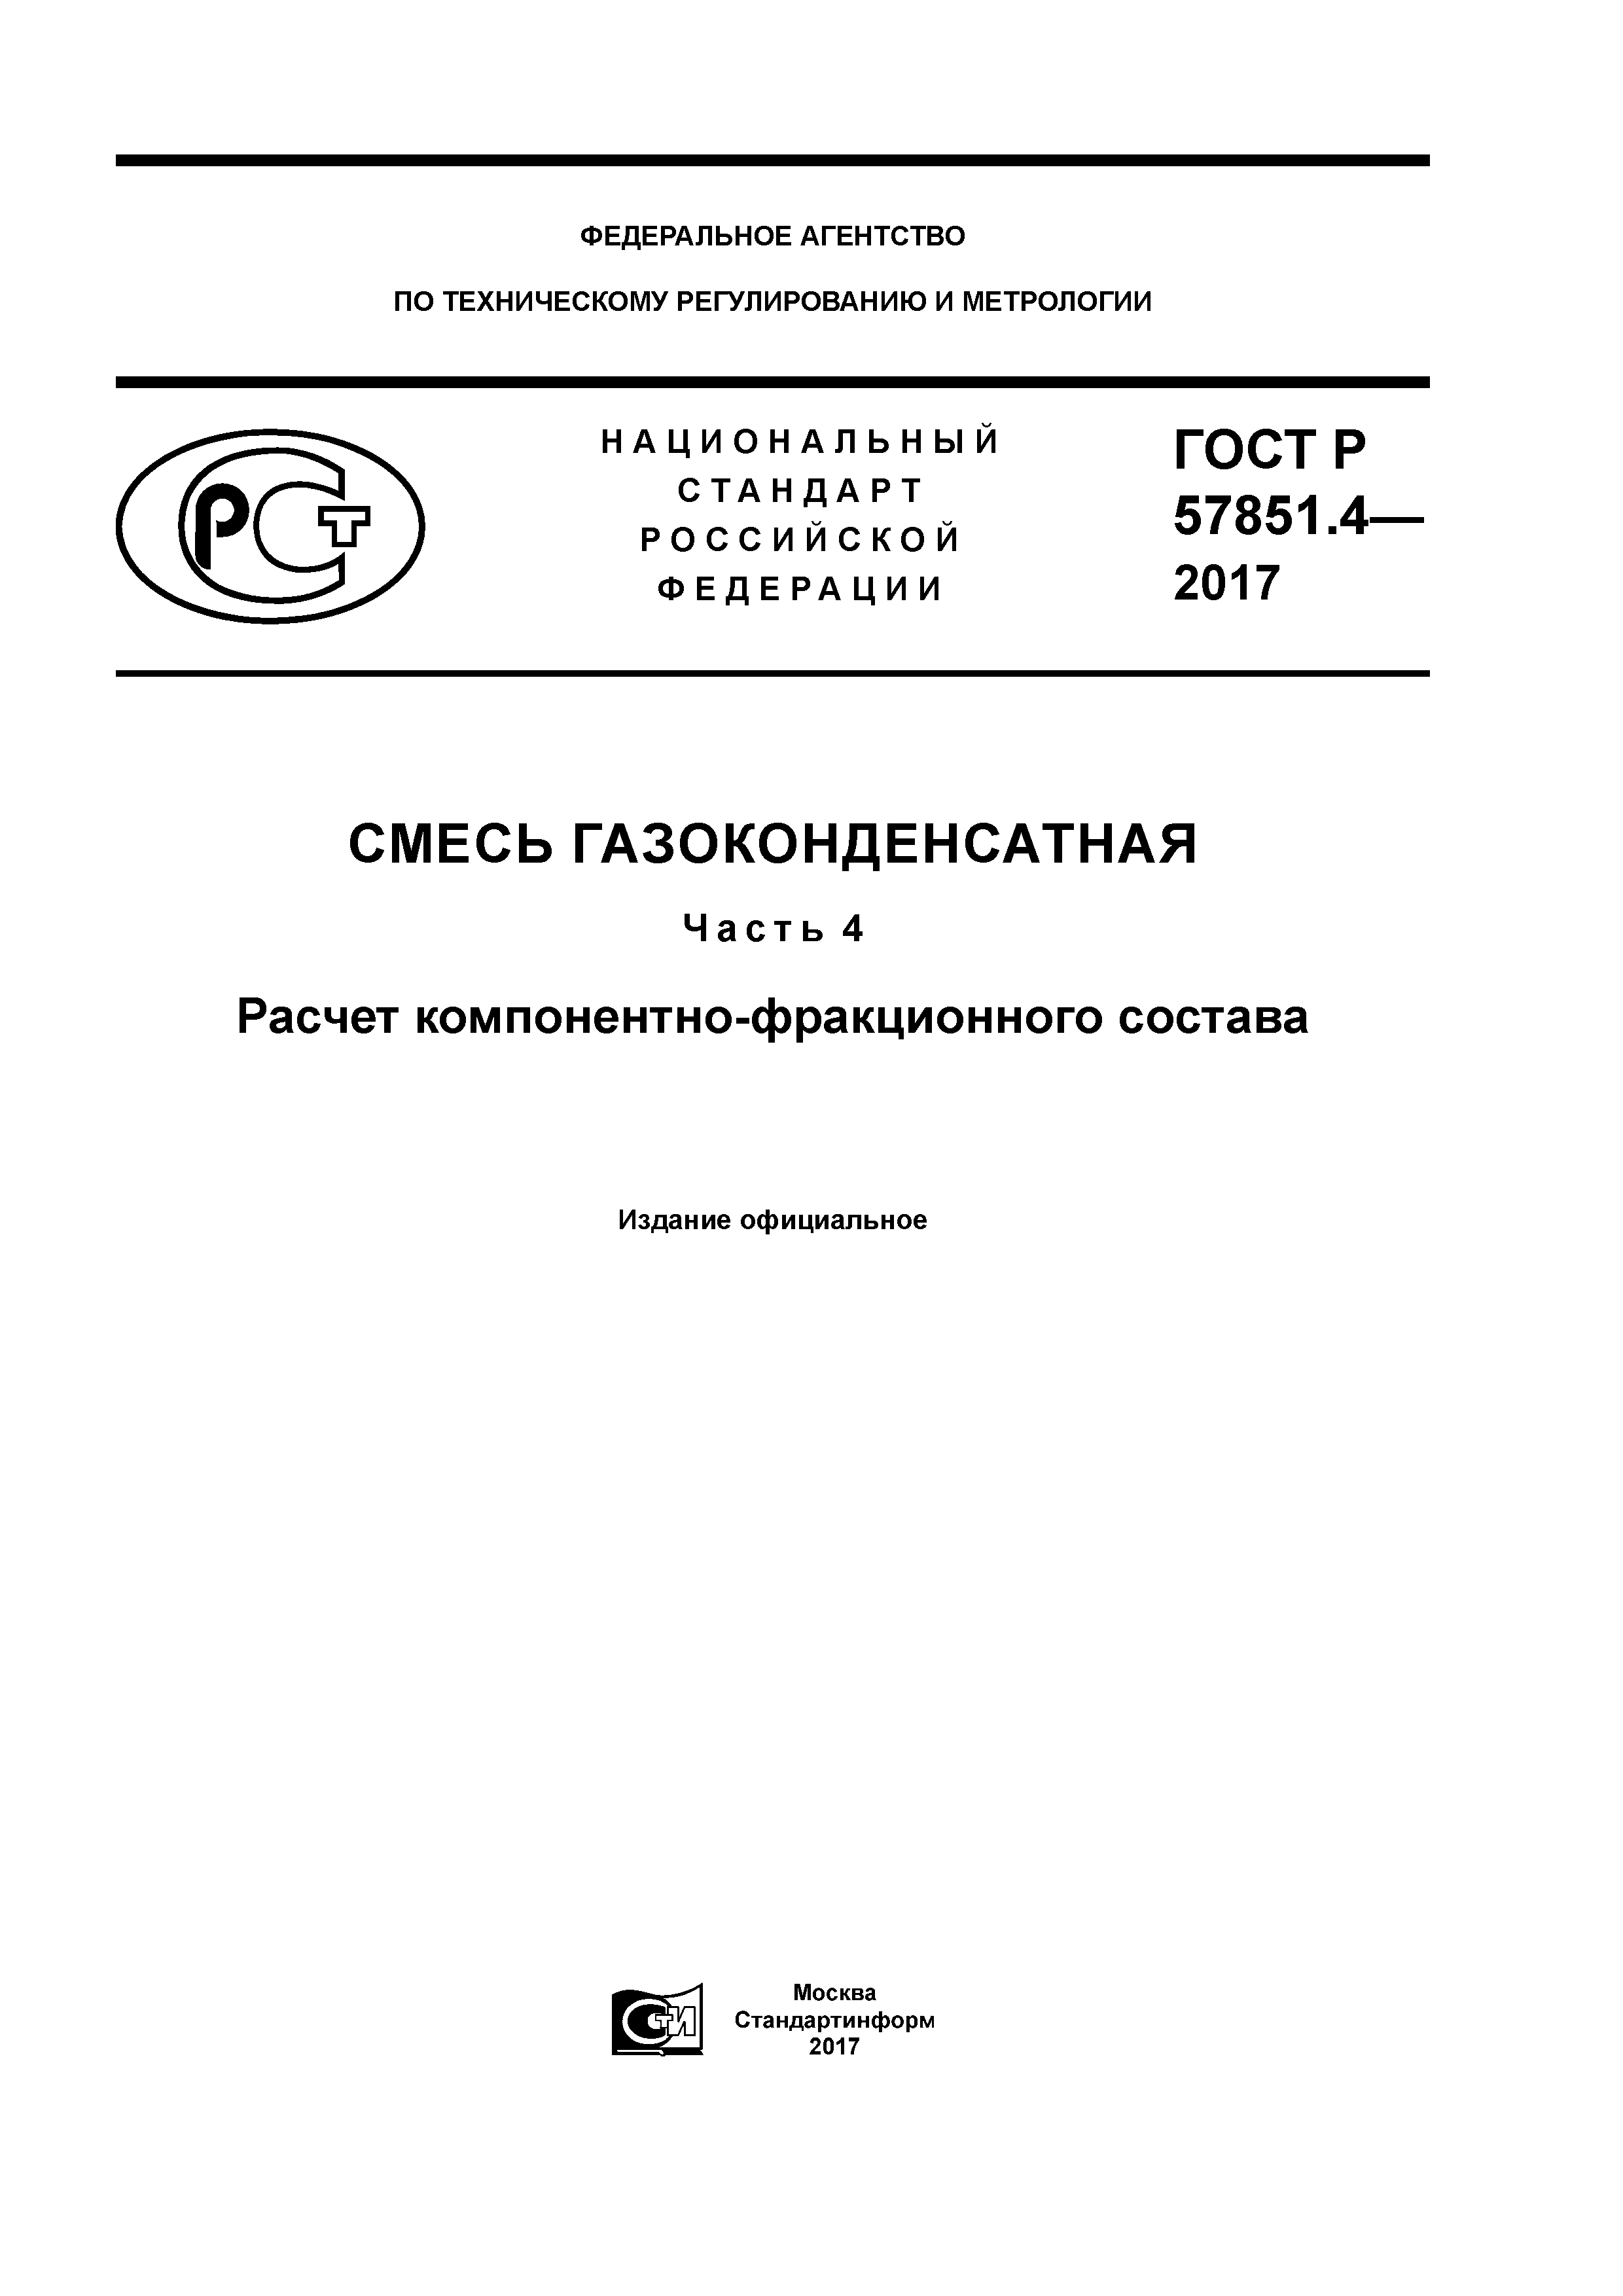 ГОСТ Р 57851.4-2017